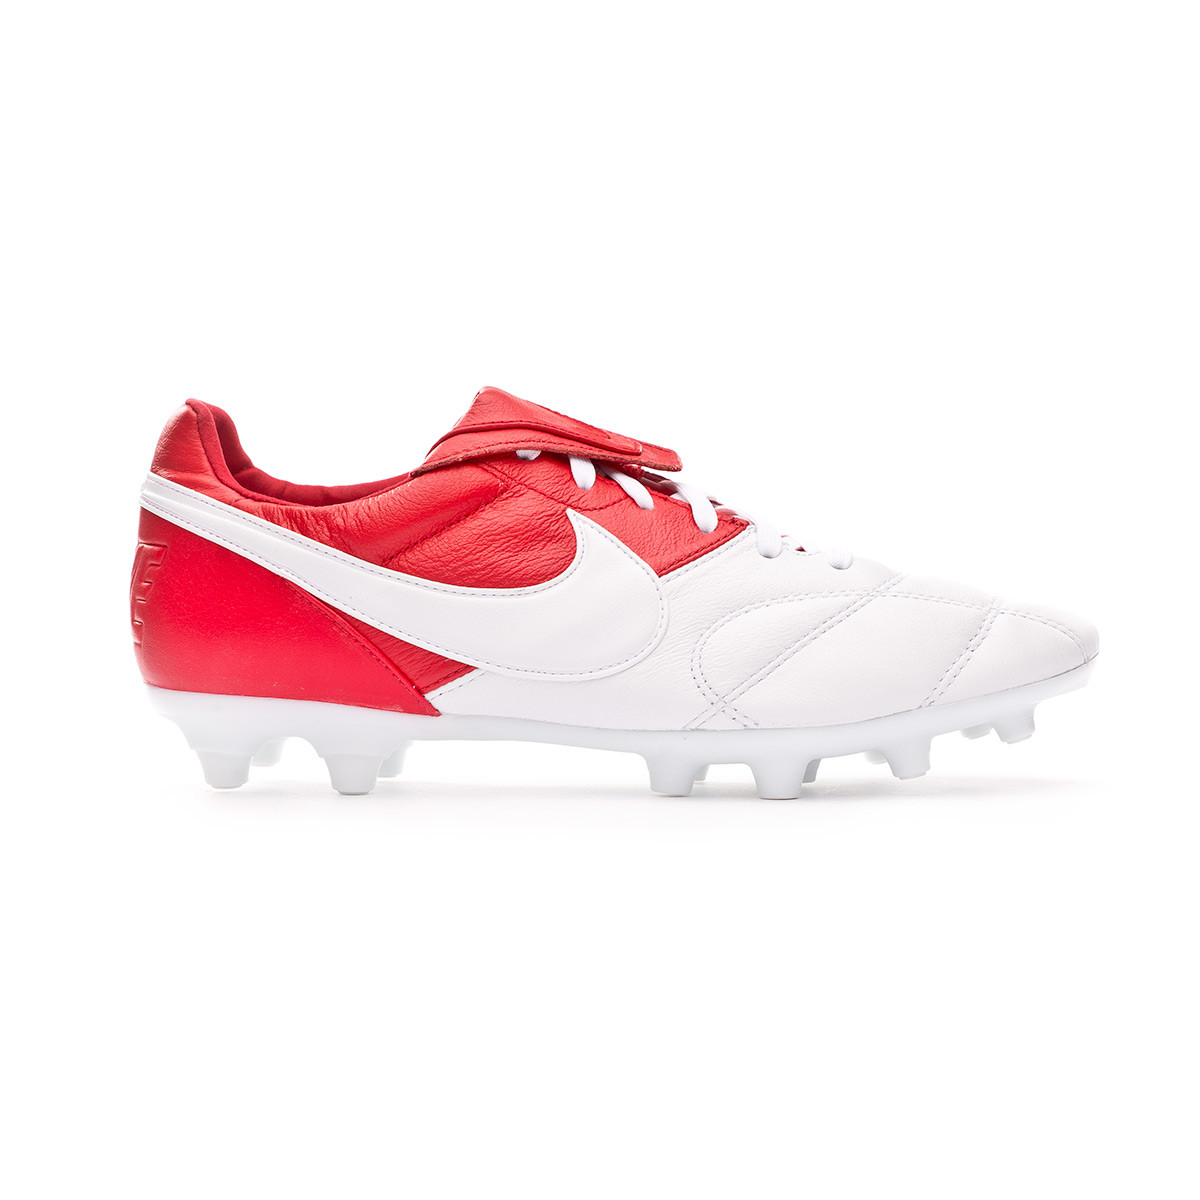 Football Boots Nike Tiempo Premier Ii Fg University Red White